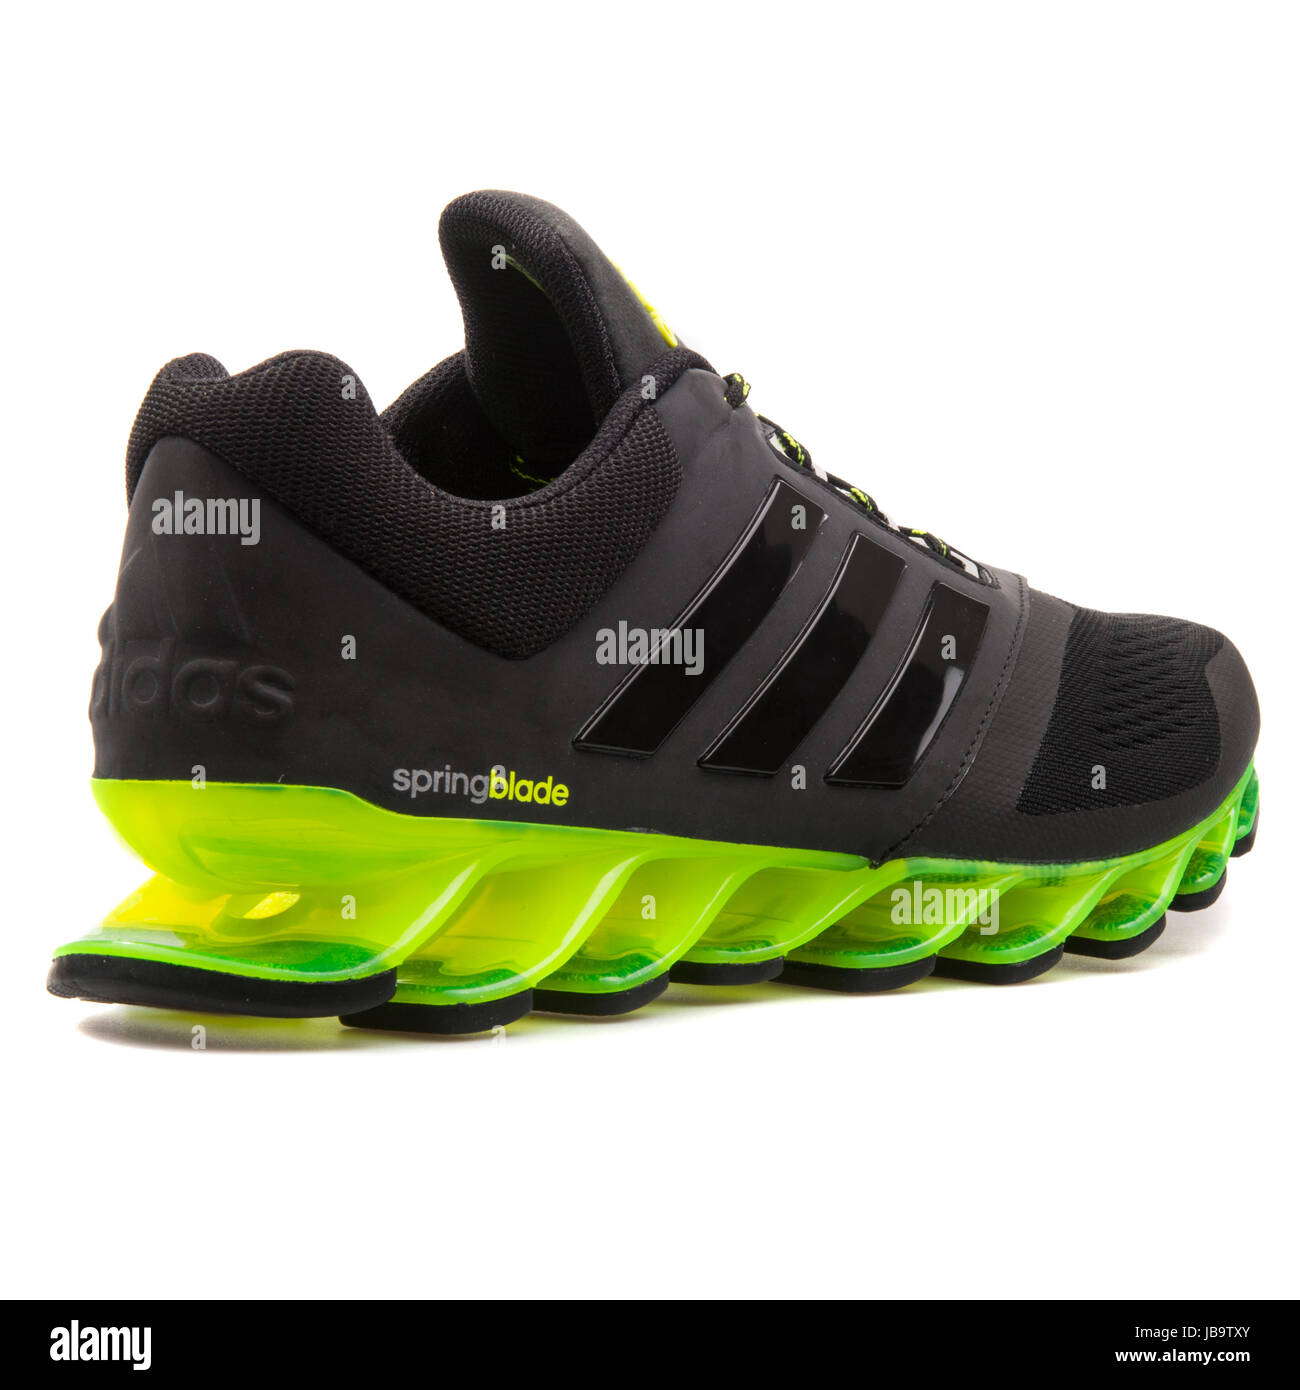 Adidas Springblade Drive 2 m noir et vert Men's Running Sneakers - D69684  Photo Stock - Alamy